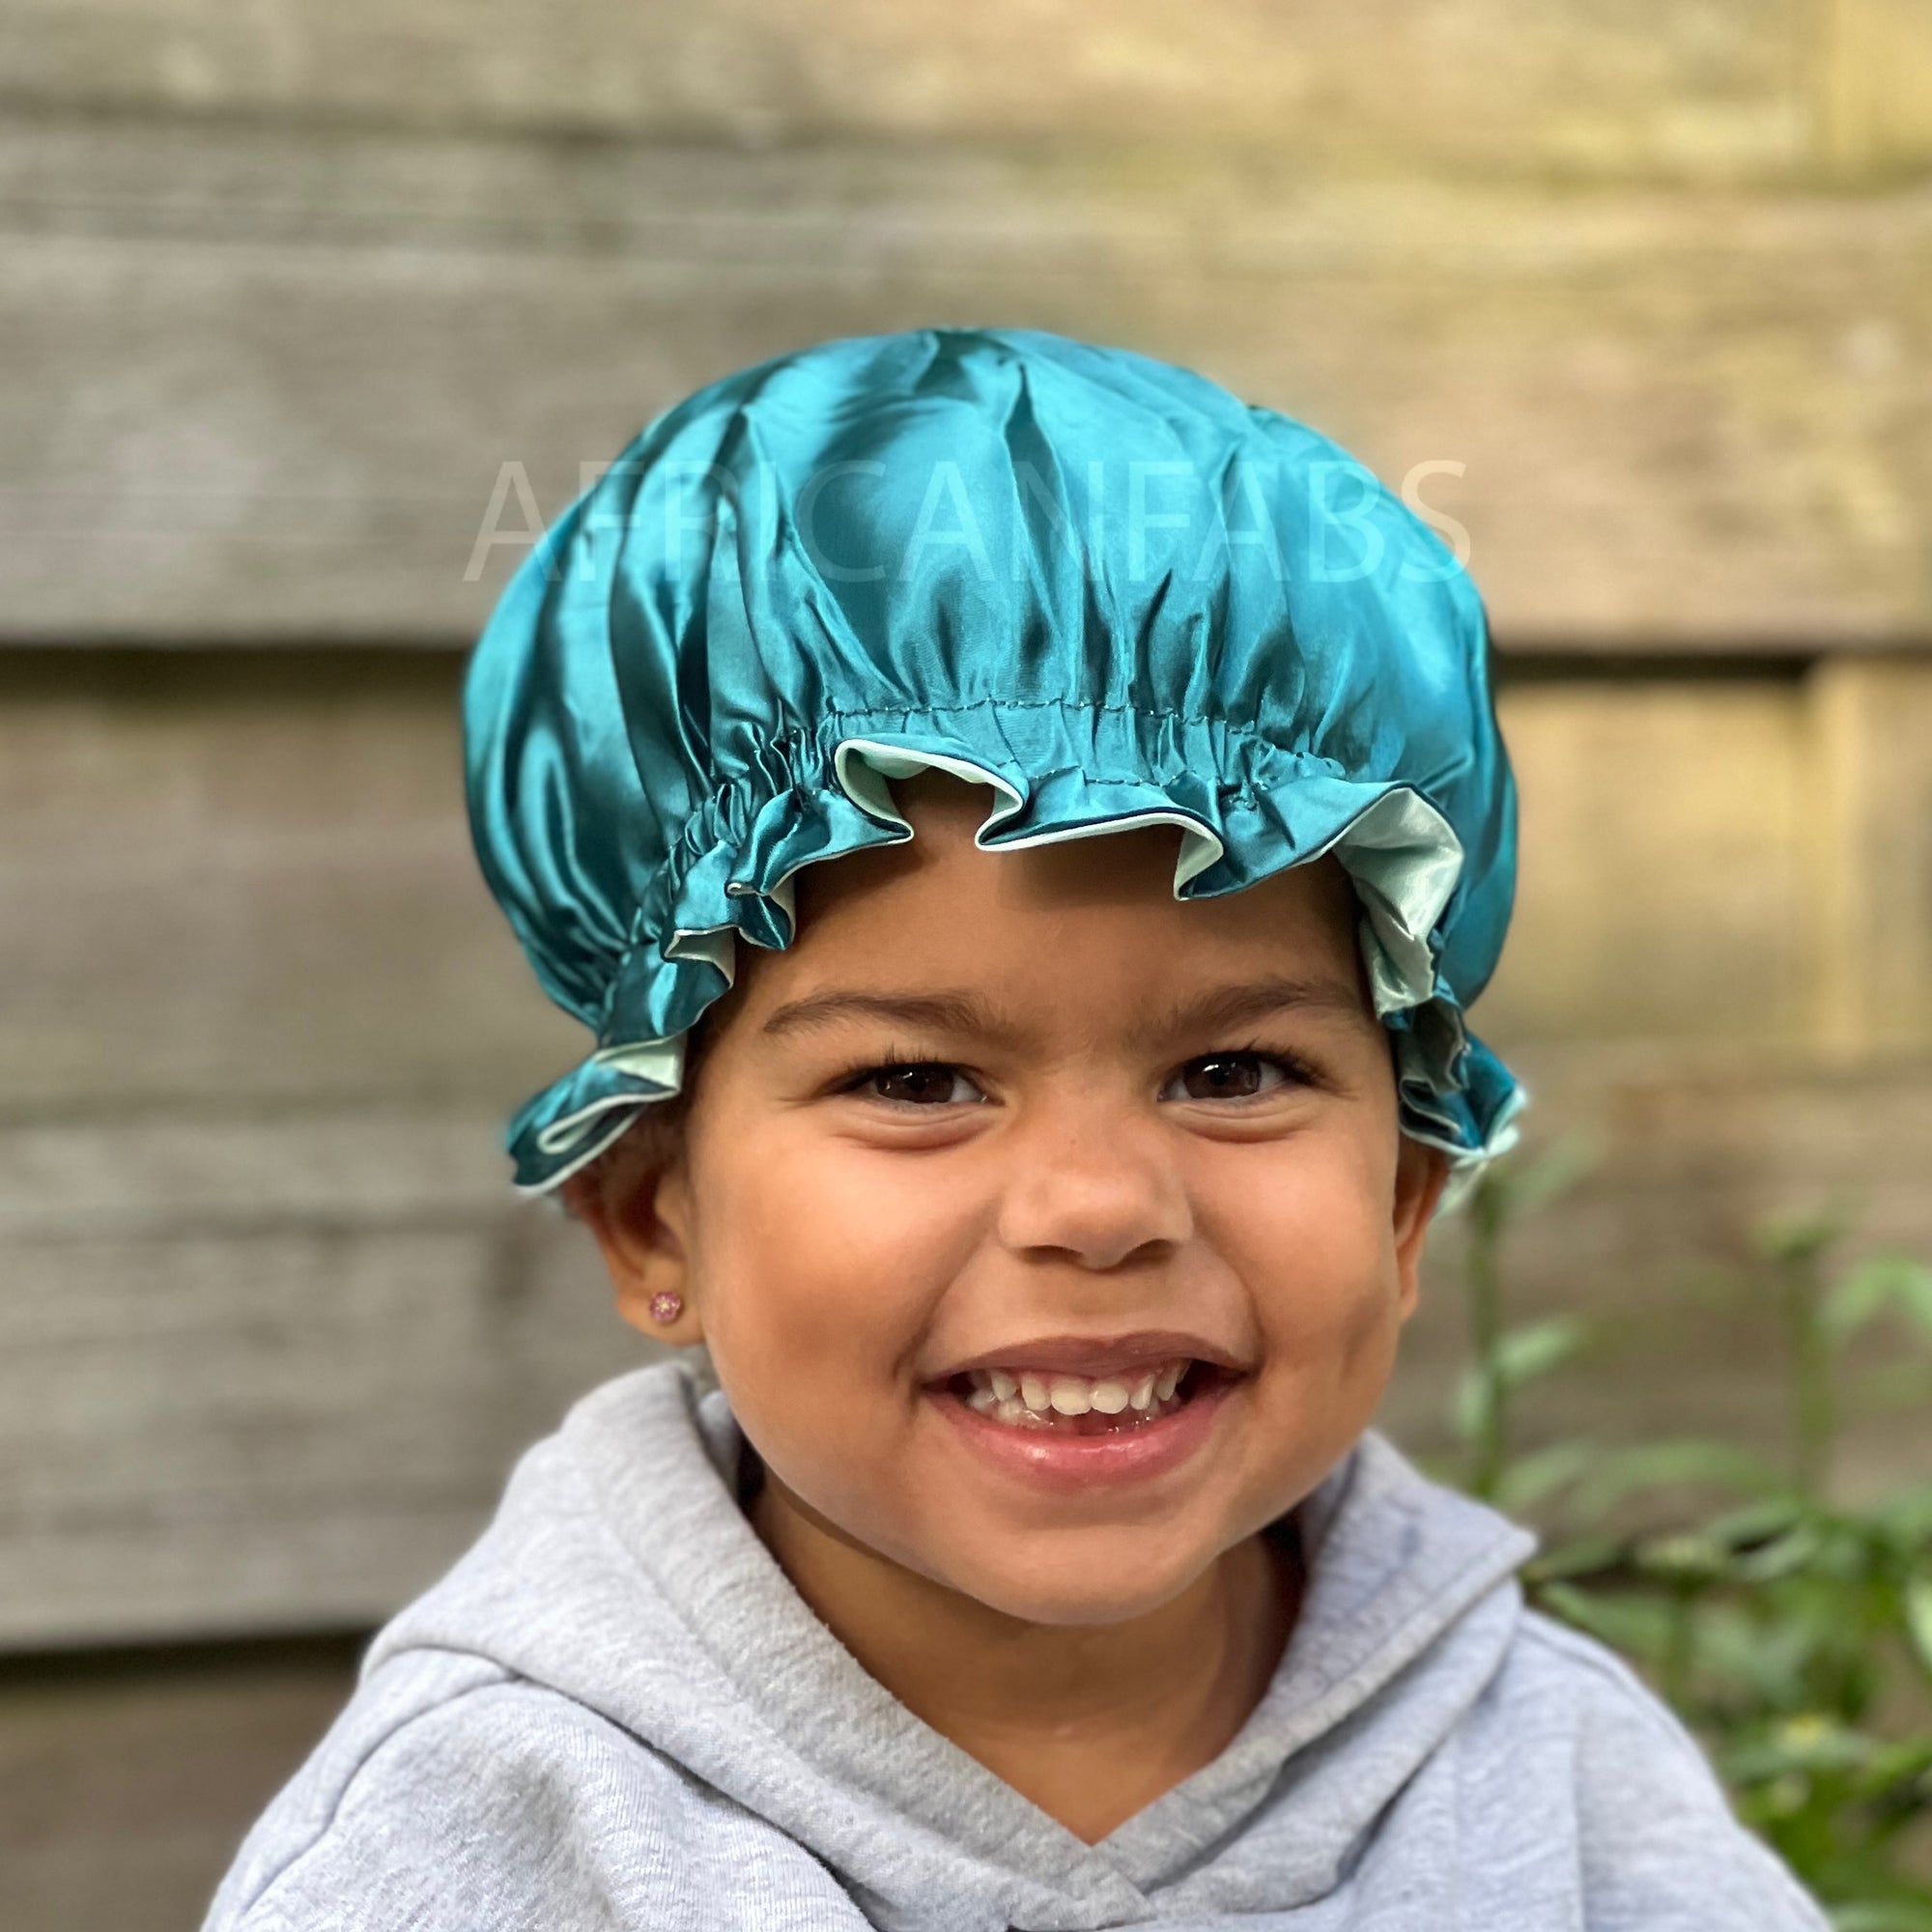 Green Satin Hair Bonnet (Kids / Children's size 3-7 years